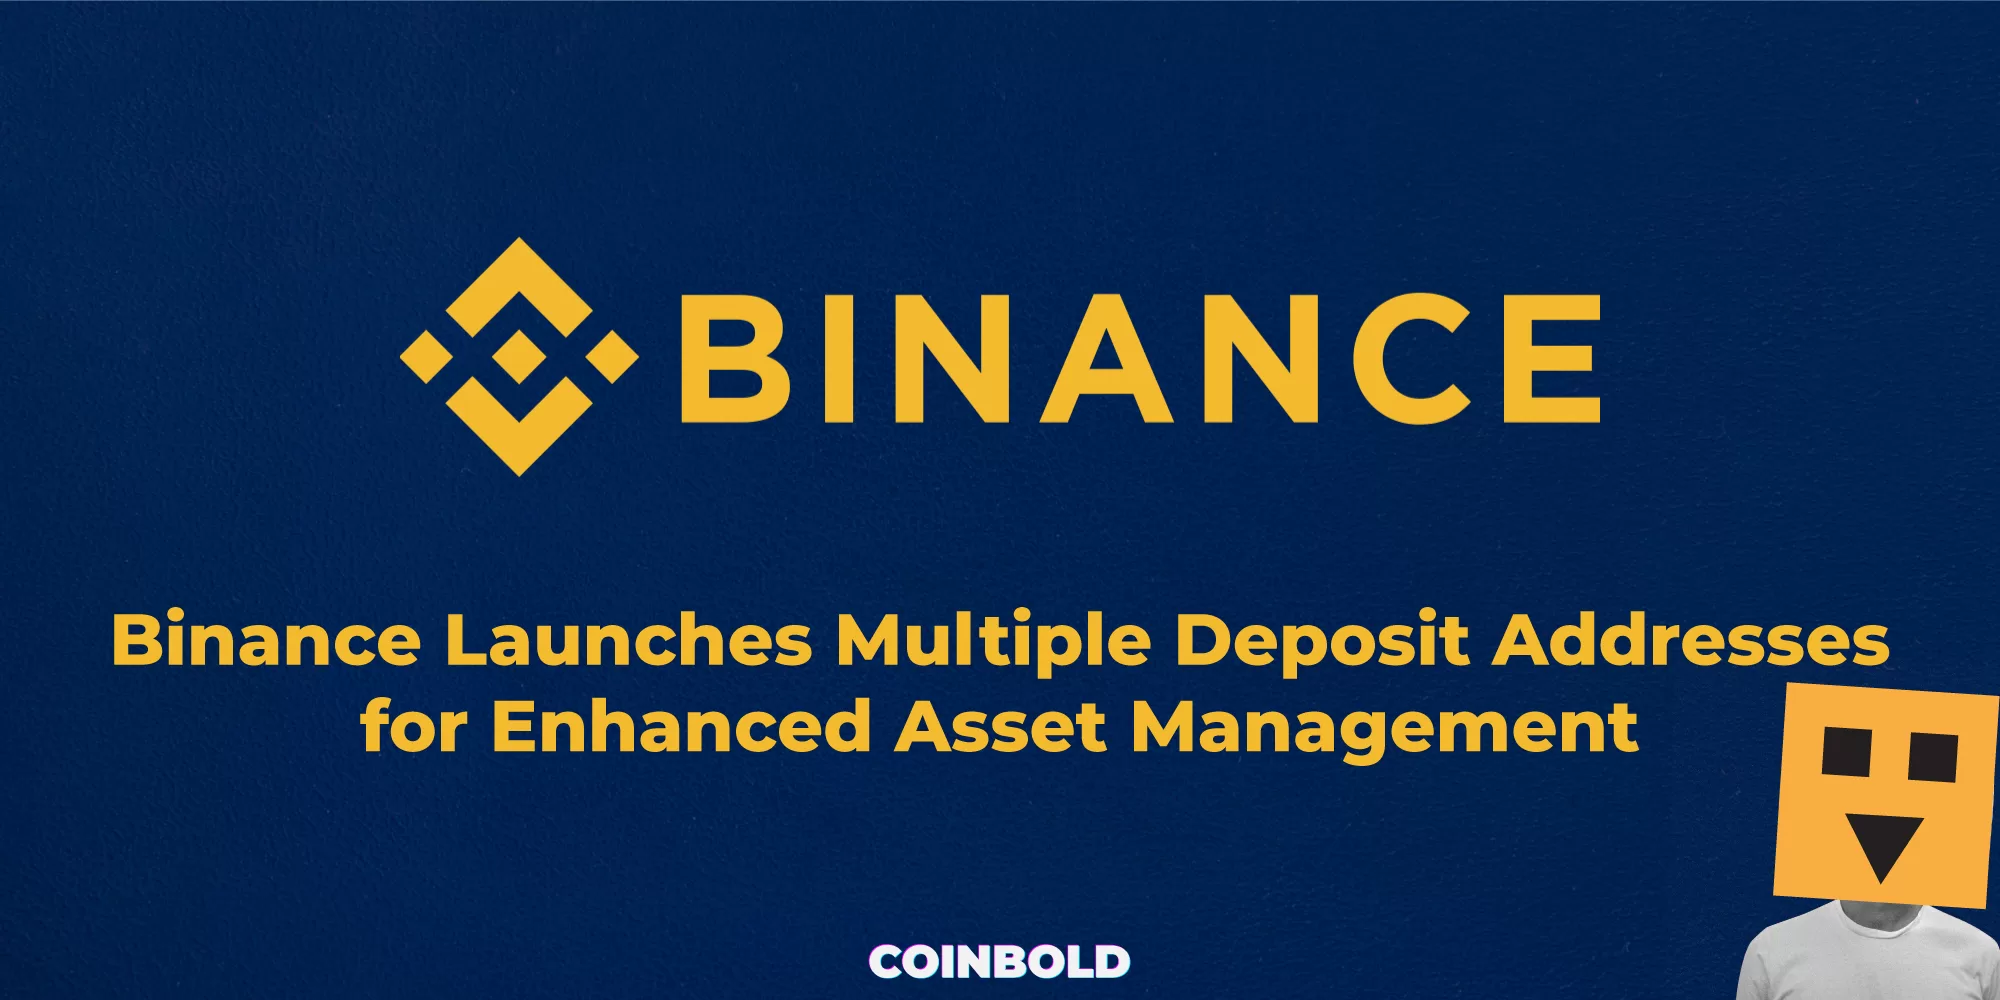 Binance Launches Multiple Deposit Addresses for Enhanced Asset Management